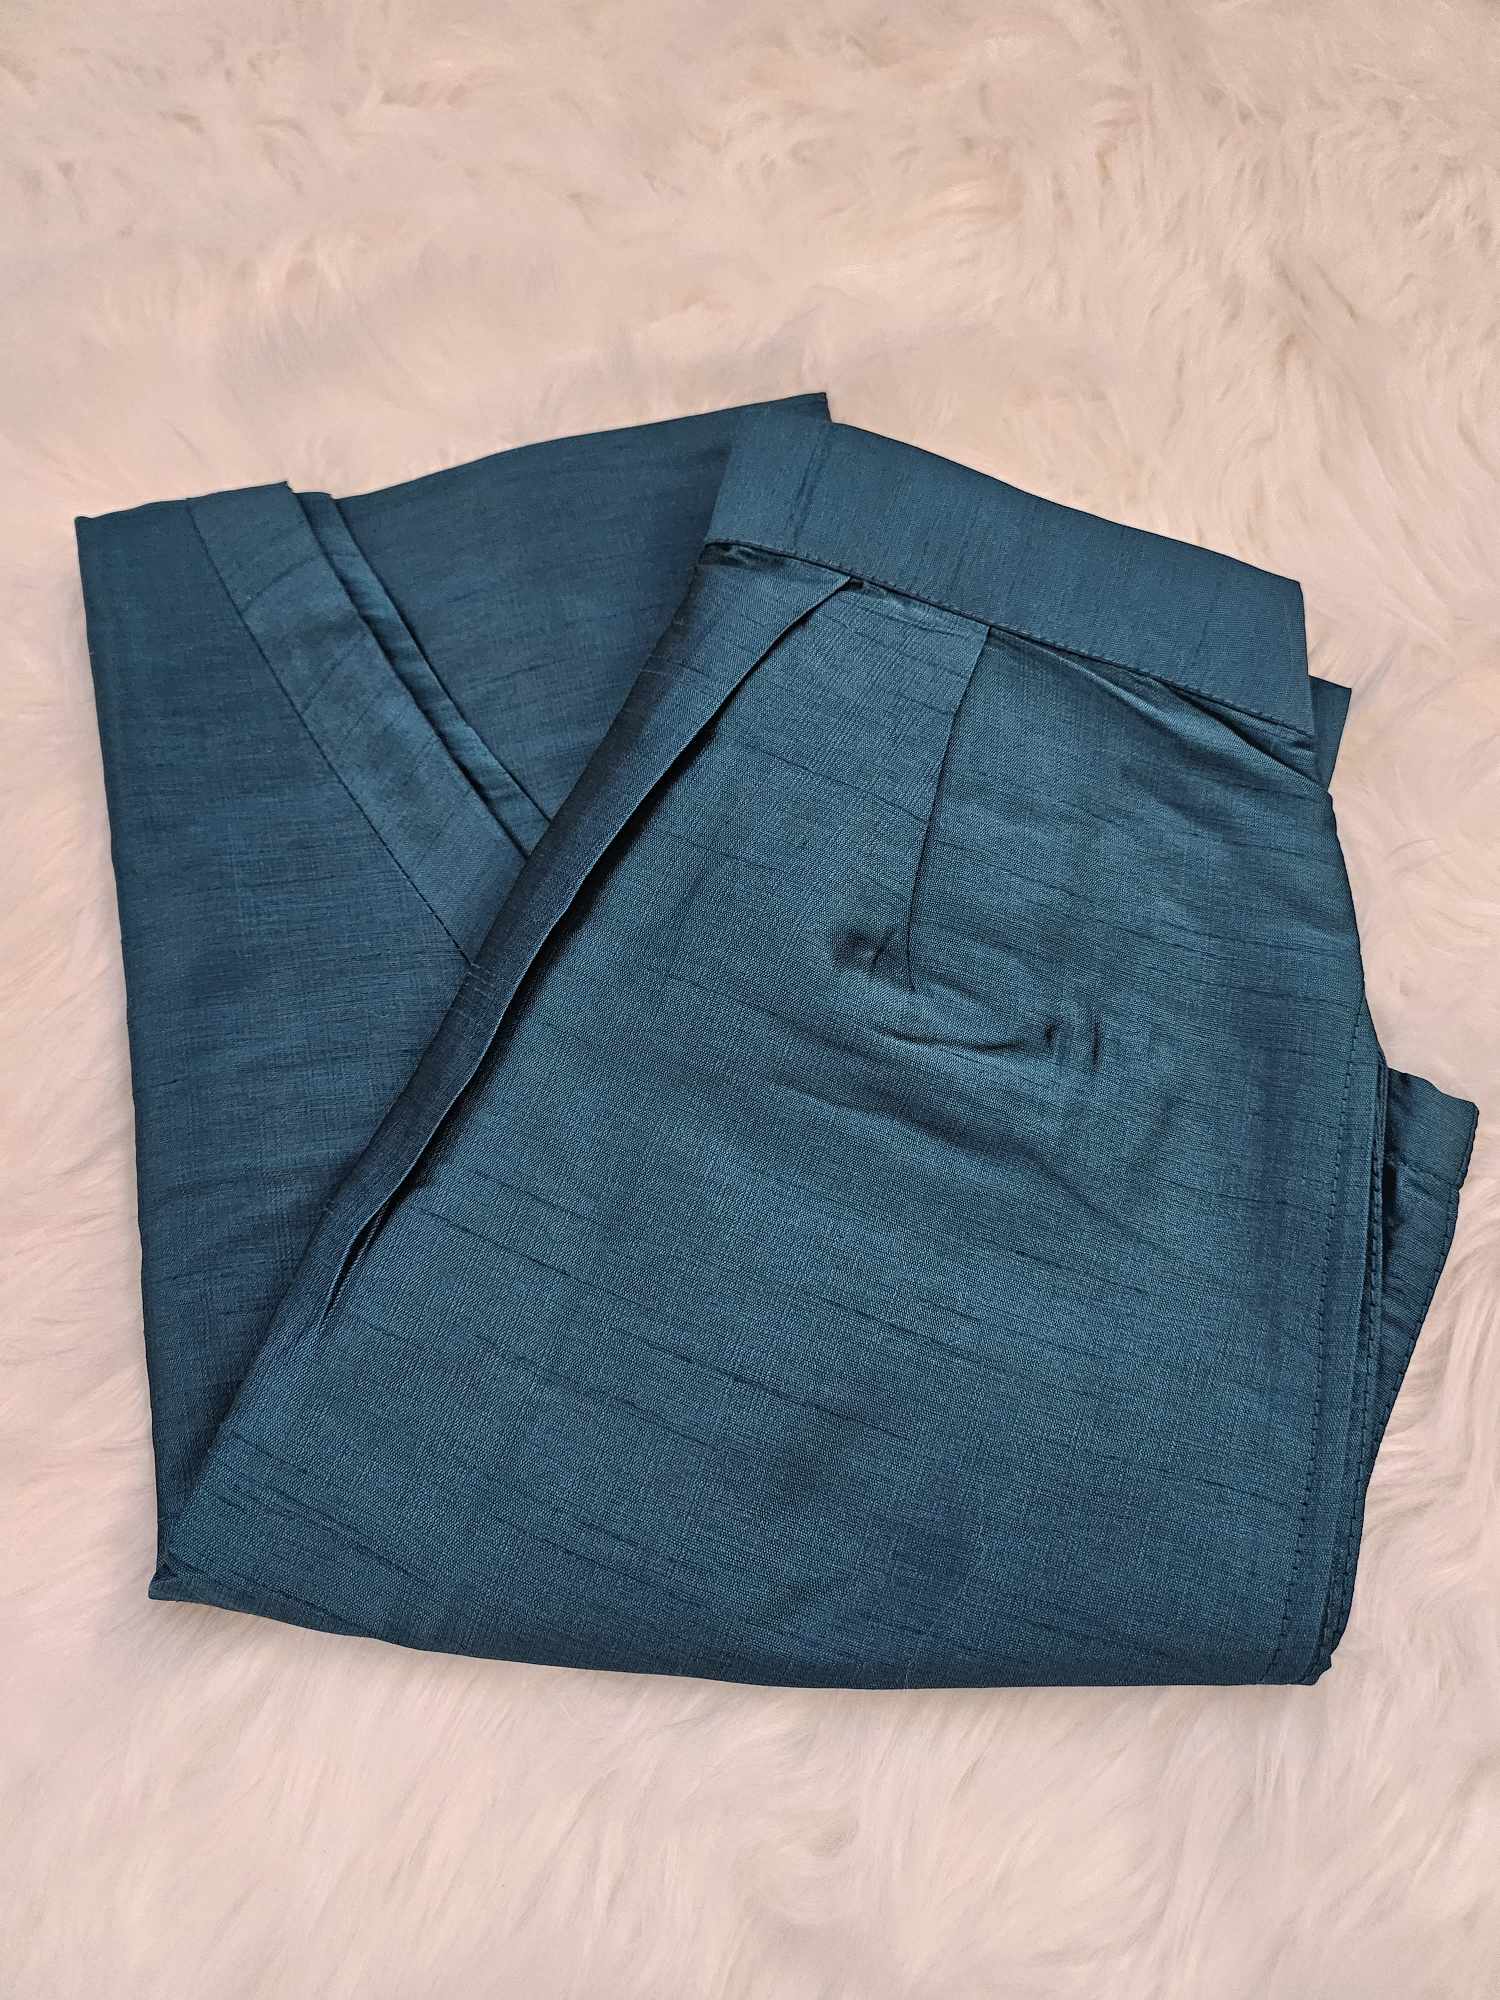 3 Piece Rama Green/Teal Kurta Pajama with Jacket Set with Sequins, Cotton Silk, Father & Son's Option, DM - 1147